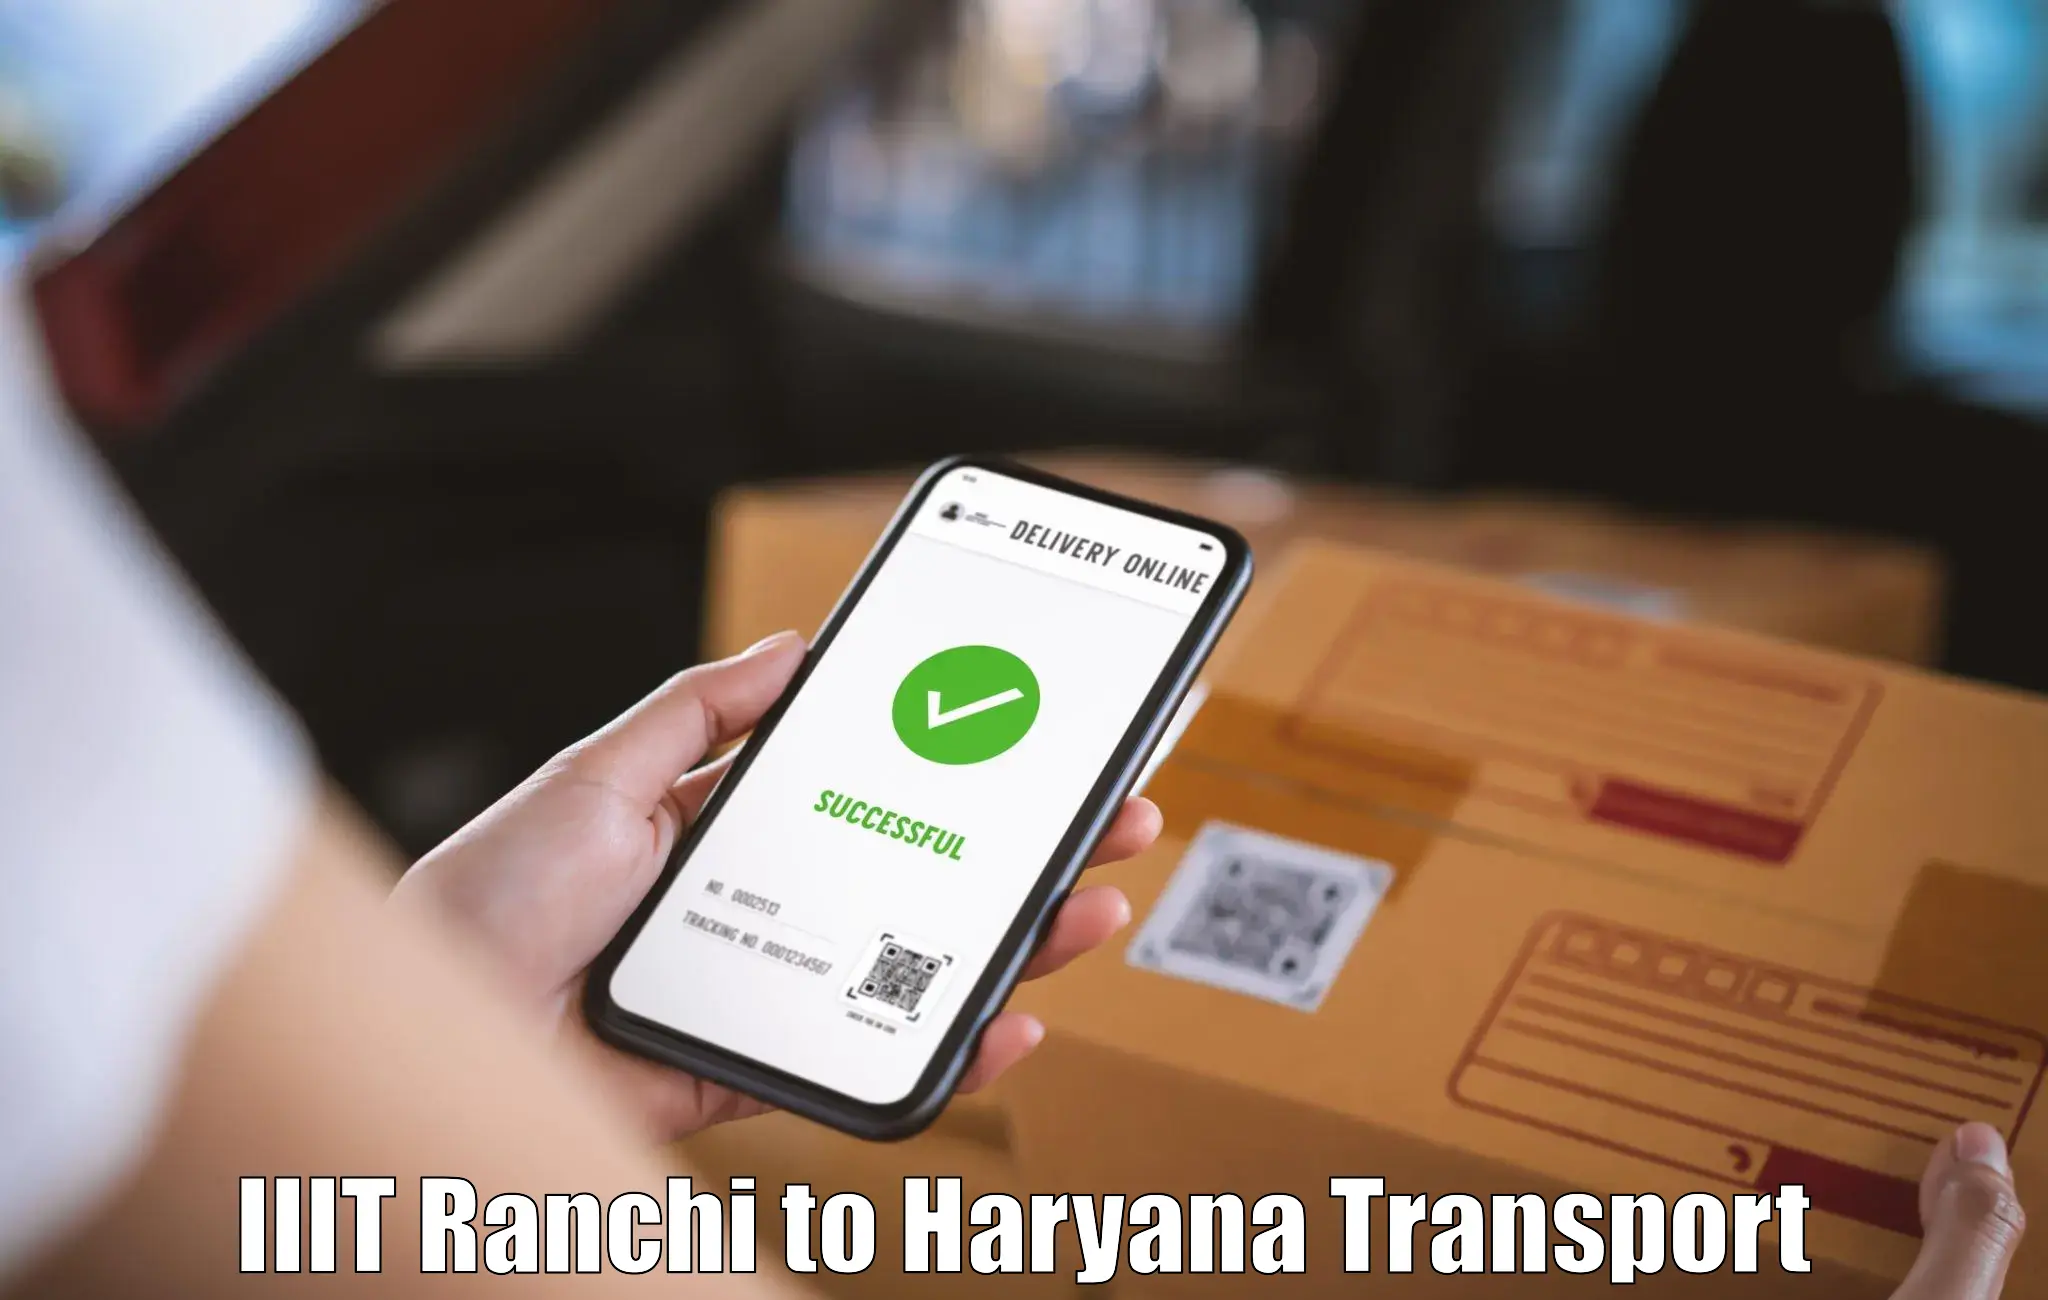 Transportation services IIIT Ranchi to Guhla